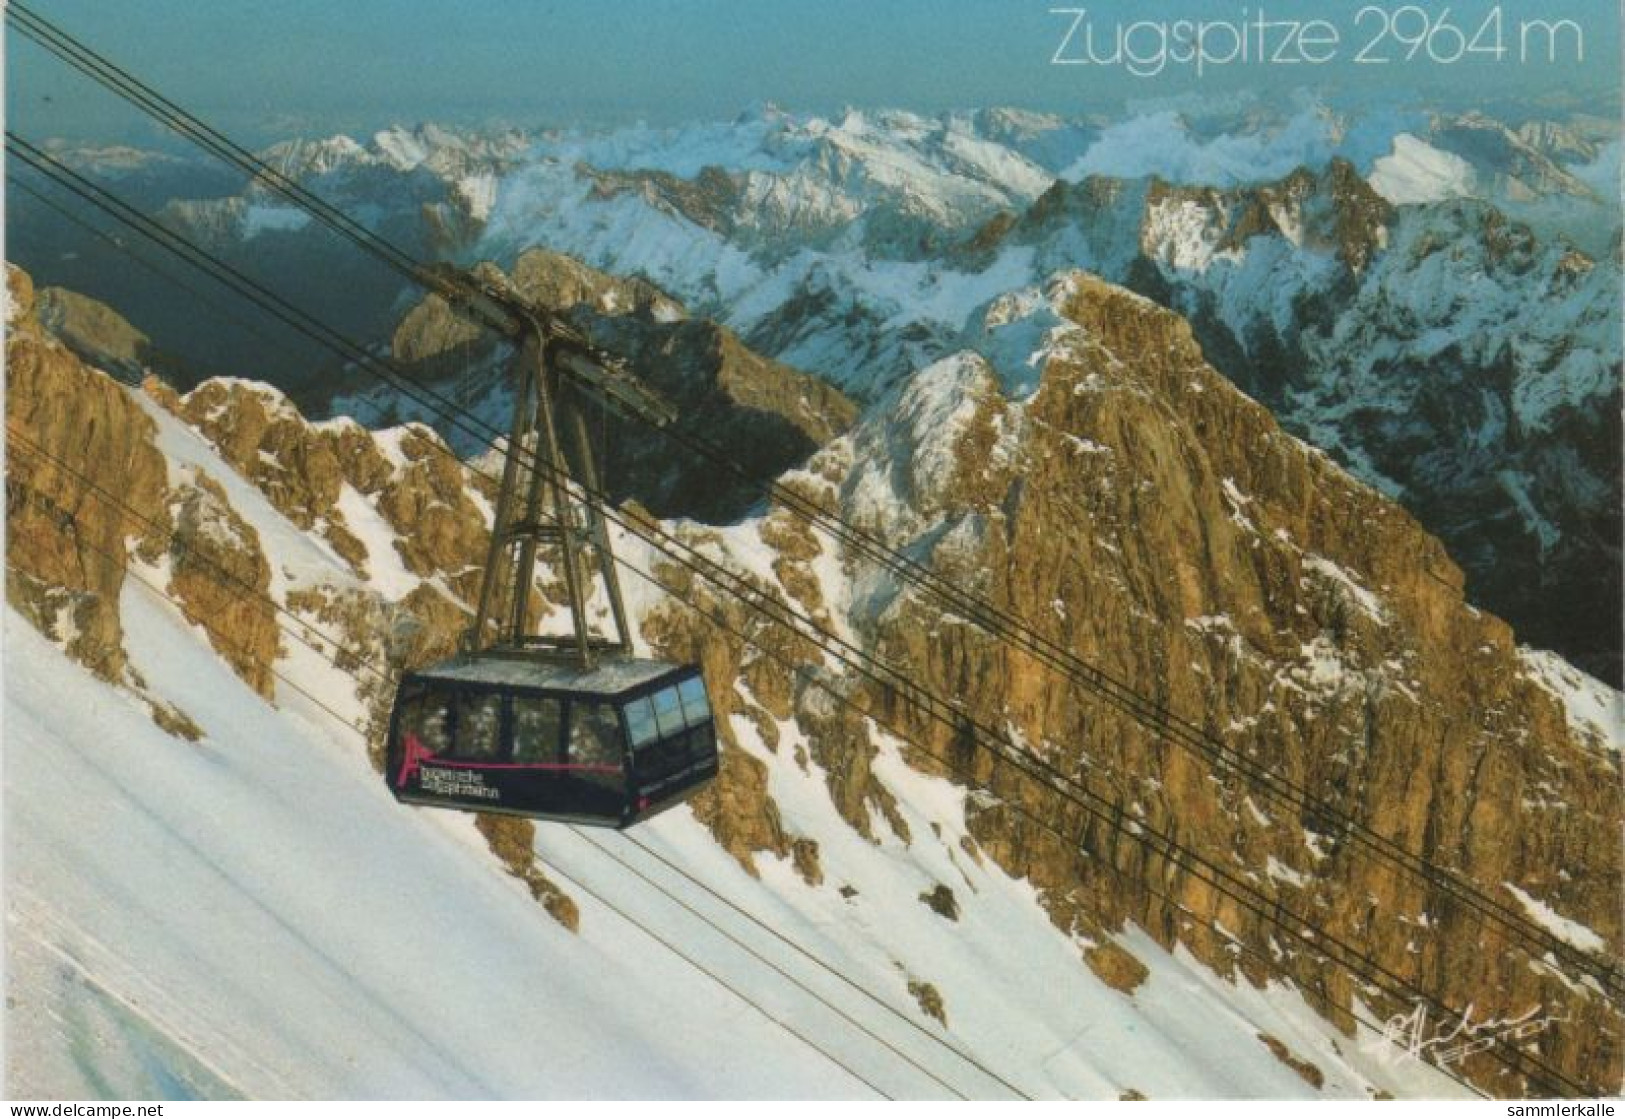 9001339 - Zugspitze - Seilbahn - Zugspitze